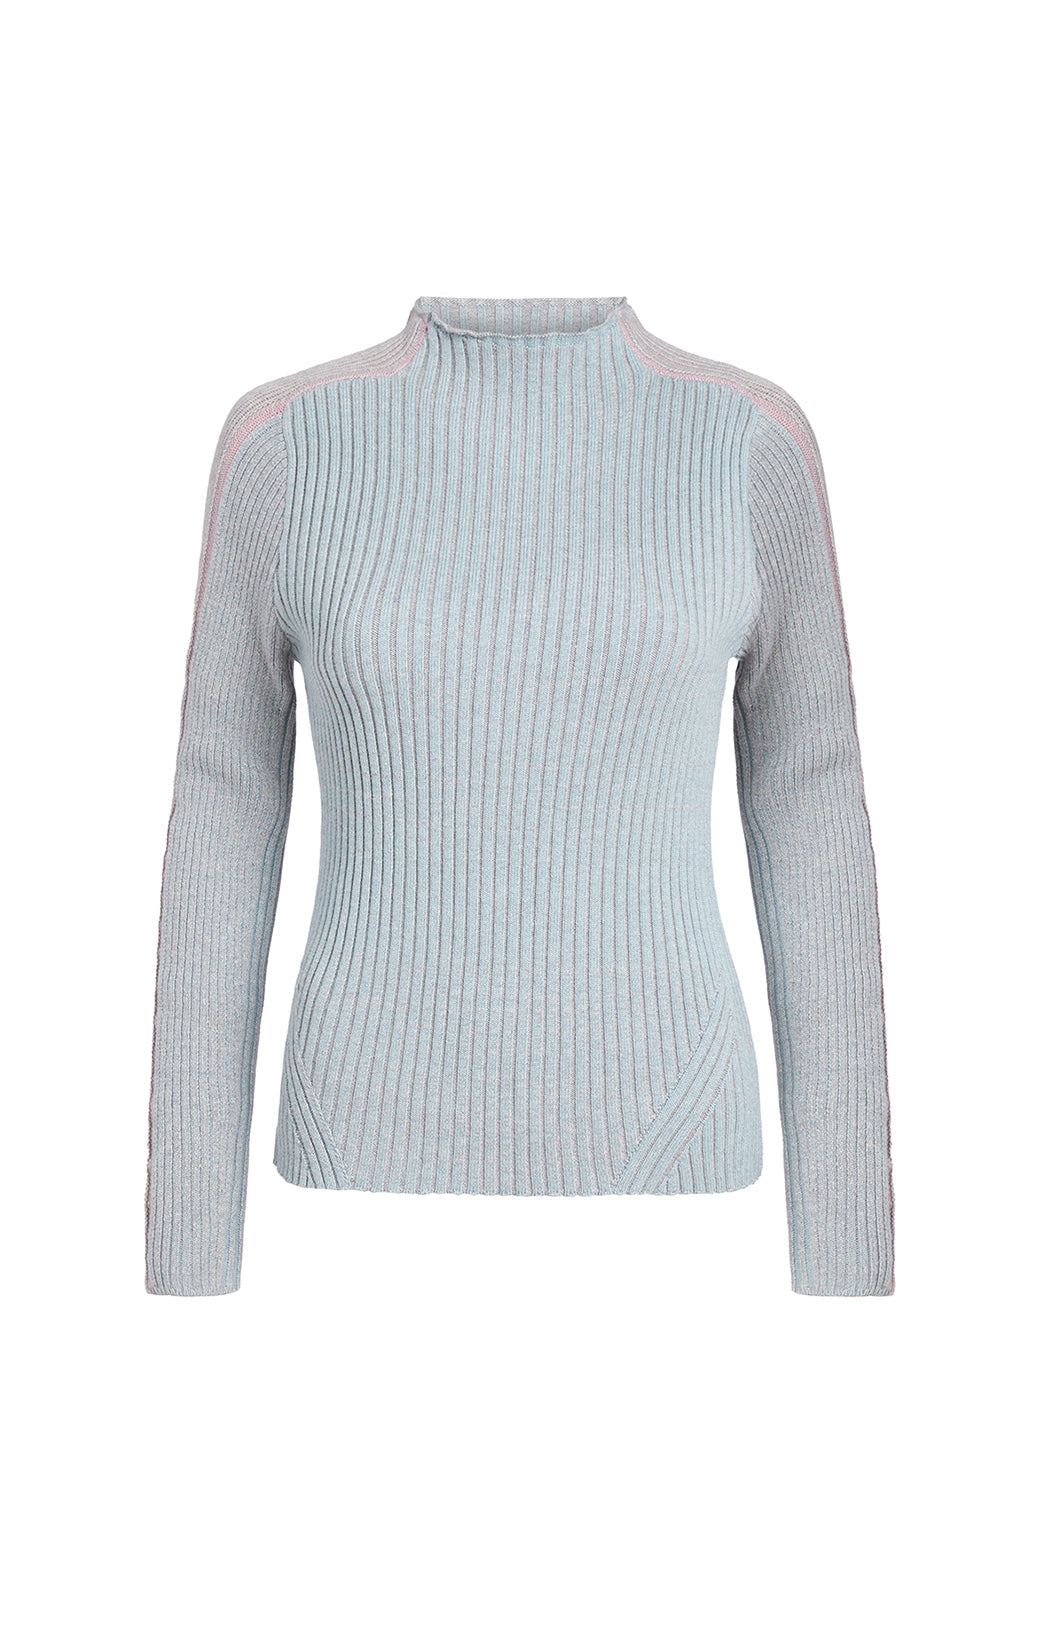 Strata - Jersey Intarsia Sweater - Product Image